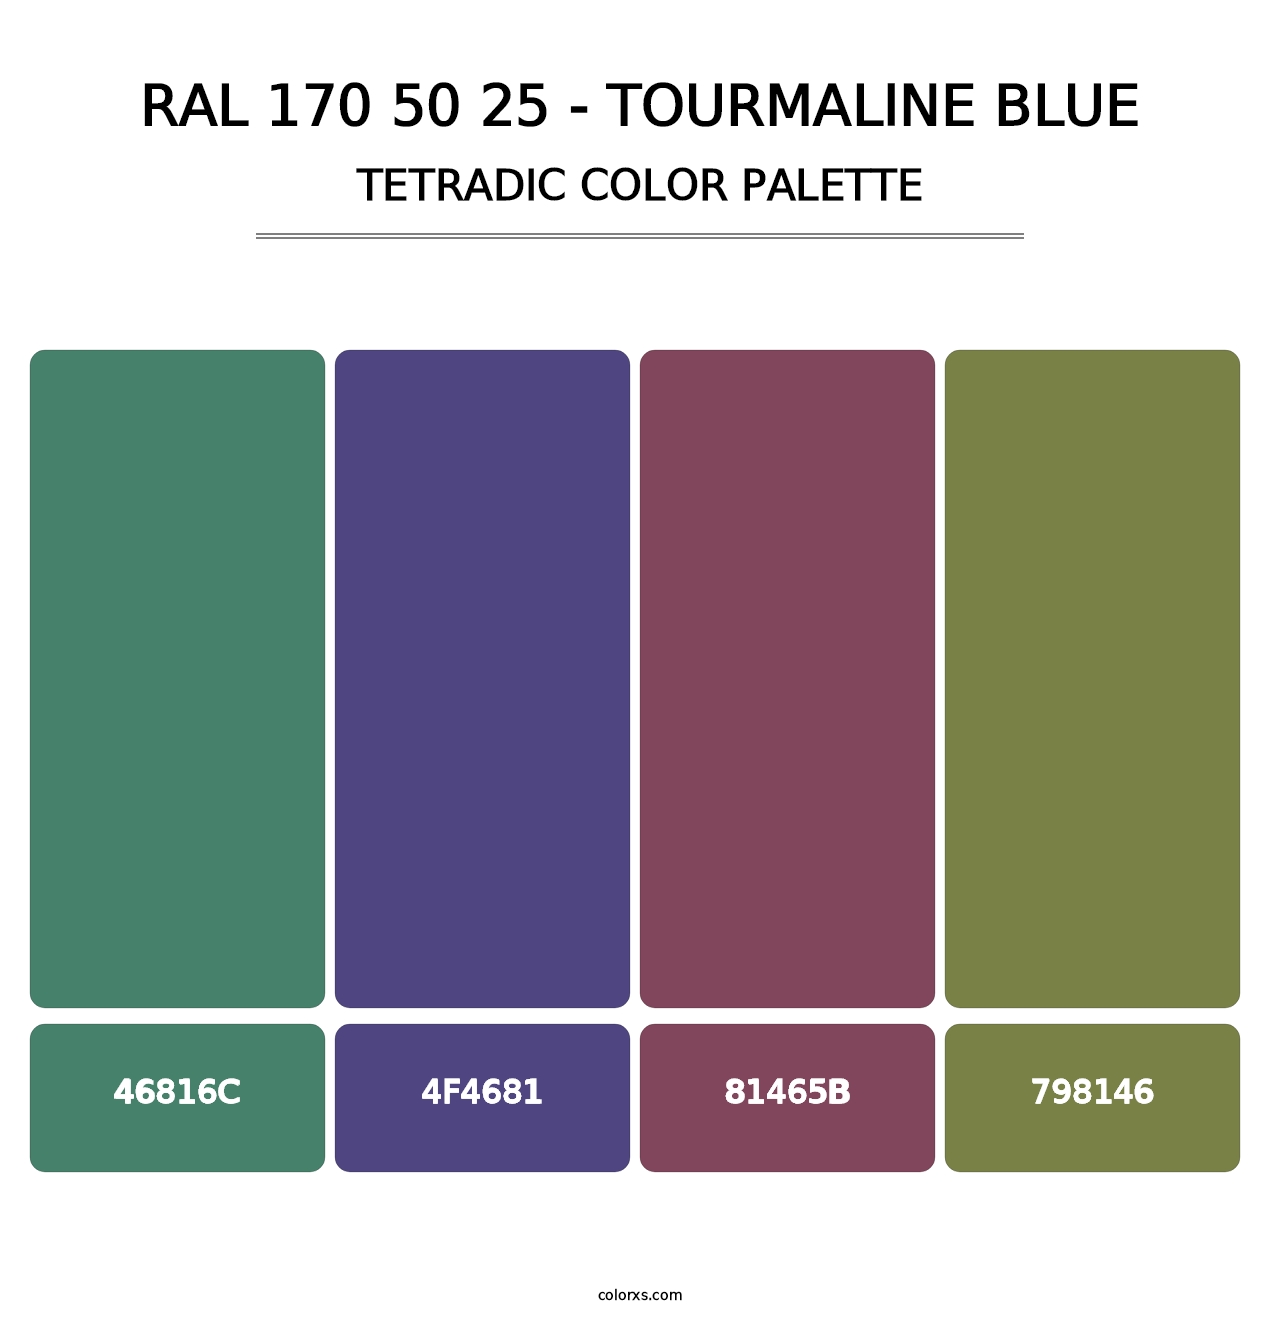 RAL 170 50 25 - Tourmaline Blue - Tetradic Color Palette